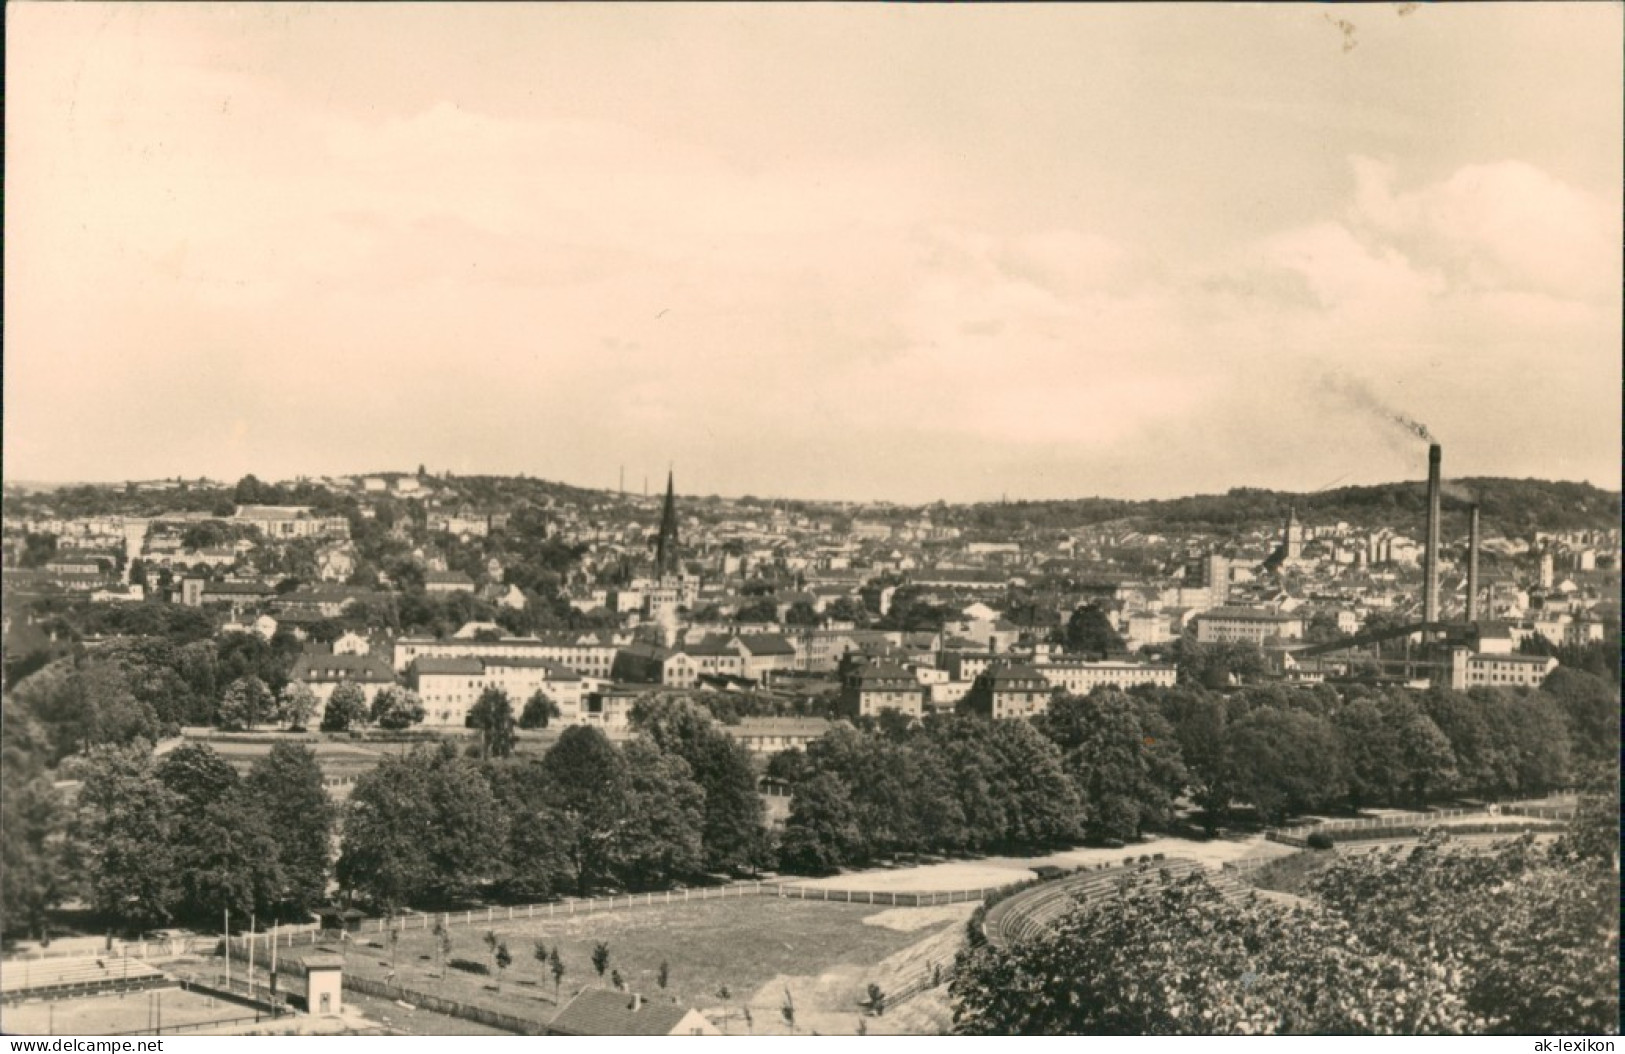 Ansichtskarte Gera Panorama-Ansicht Postkarte DDR S/w AK 1962 - Gera